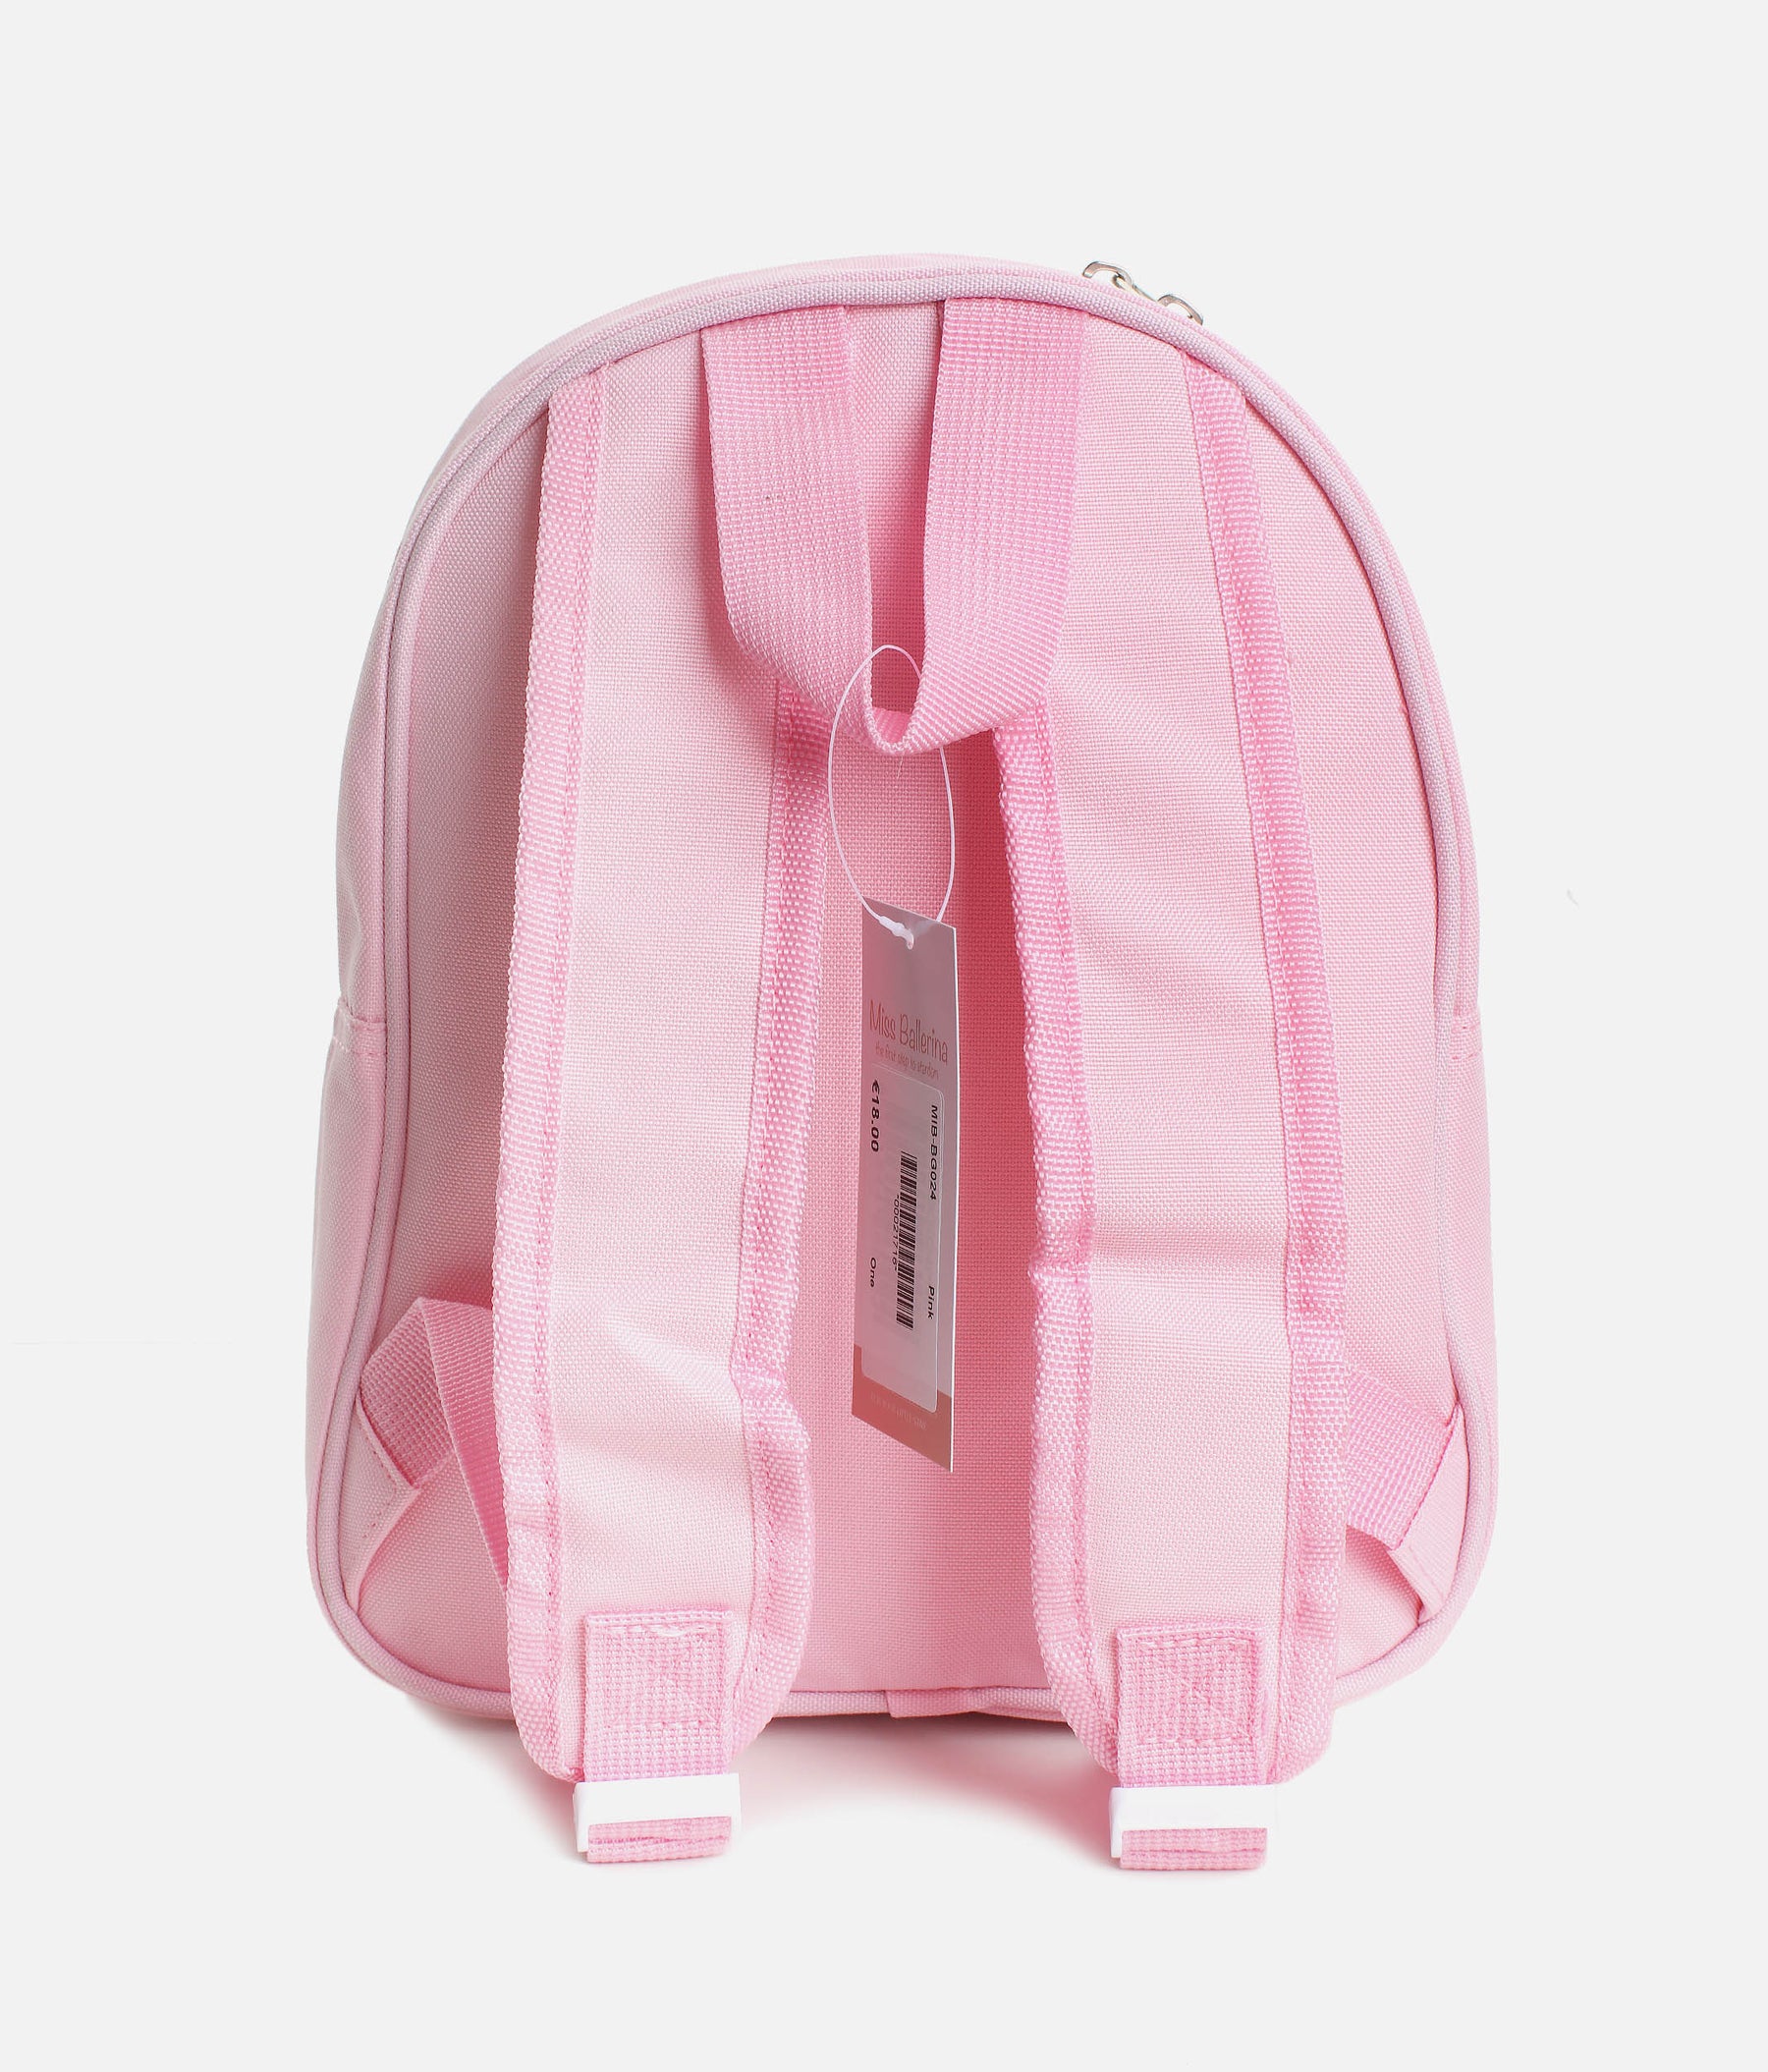 Cute Ballerina Backpack - BG 024